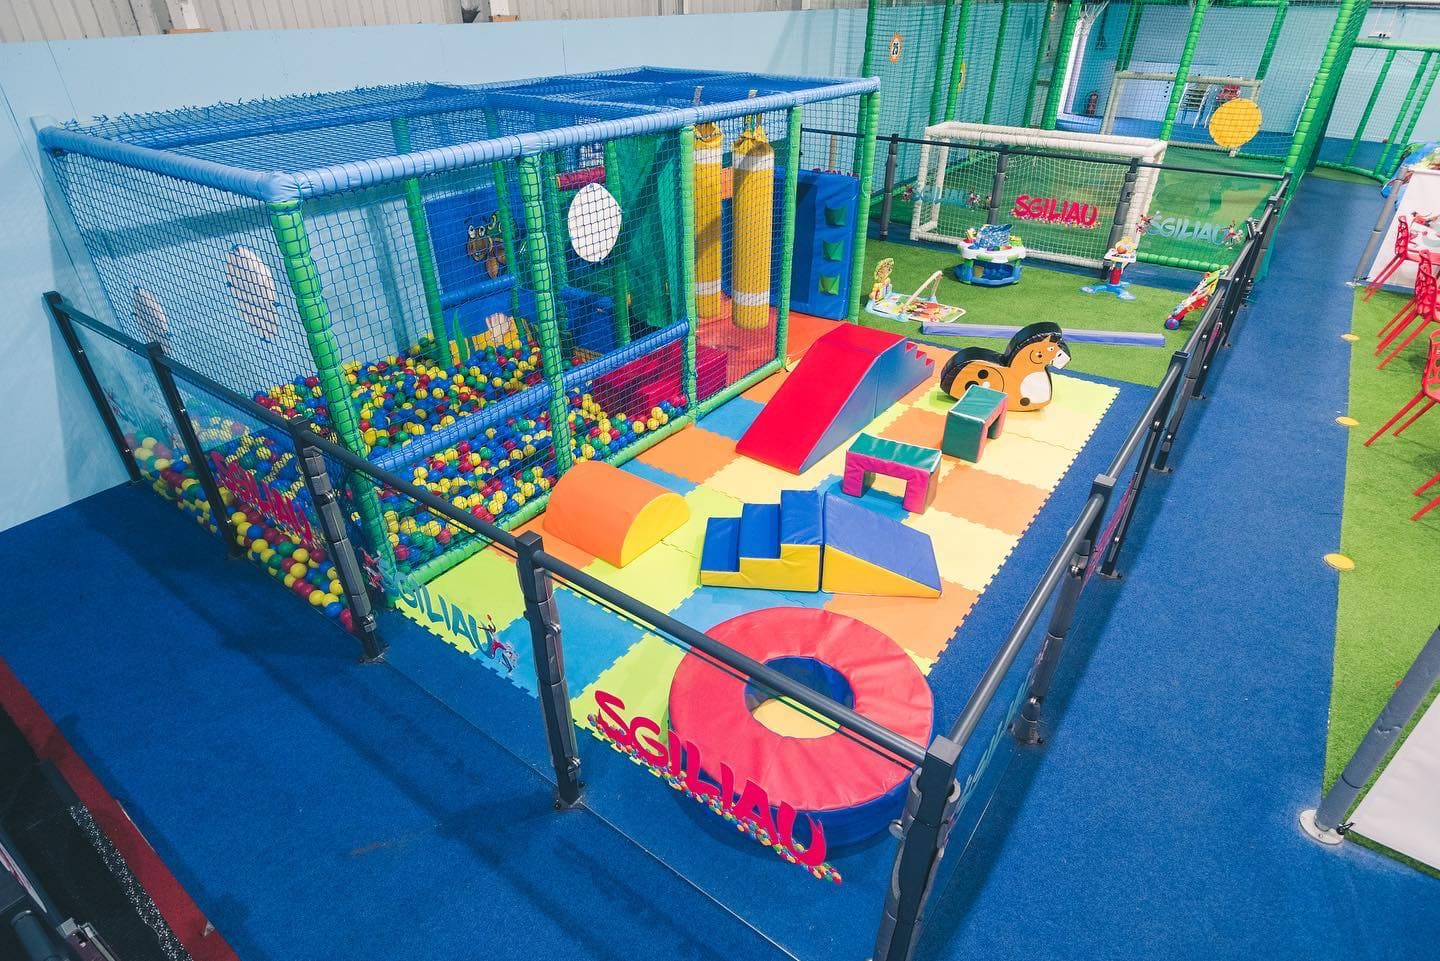 Sgiliau Play Centre